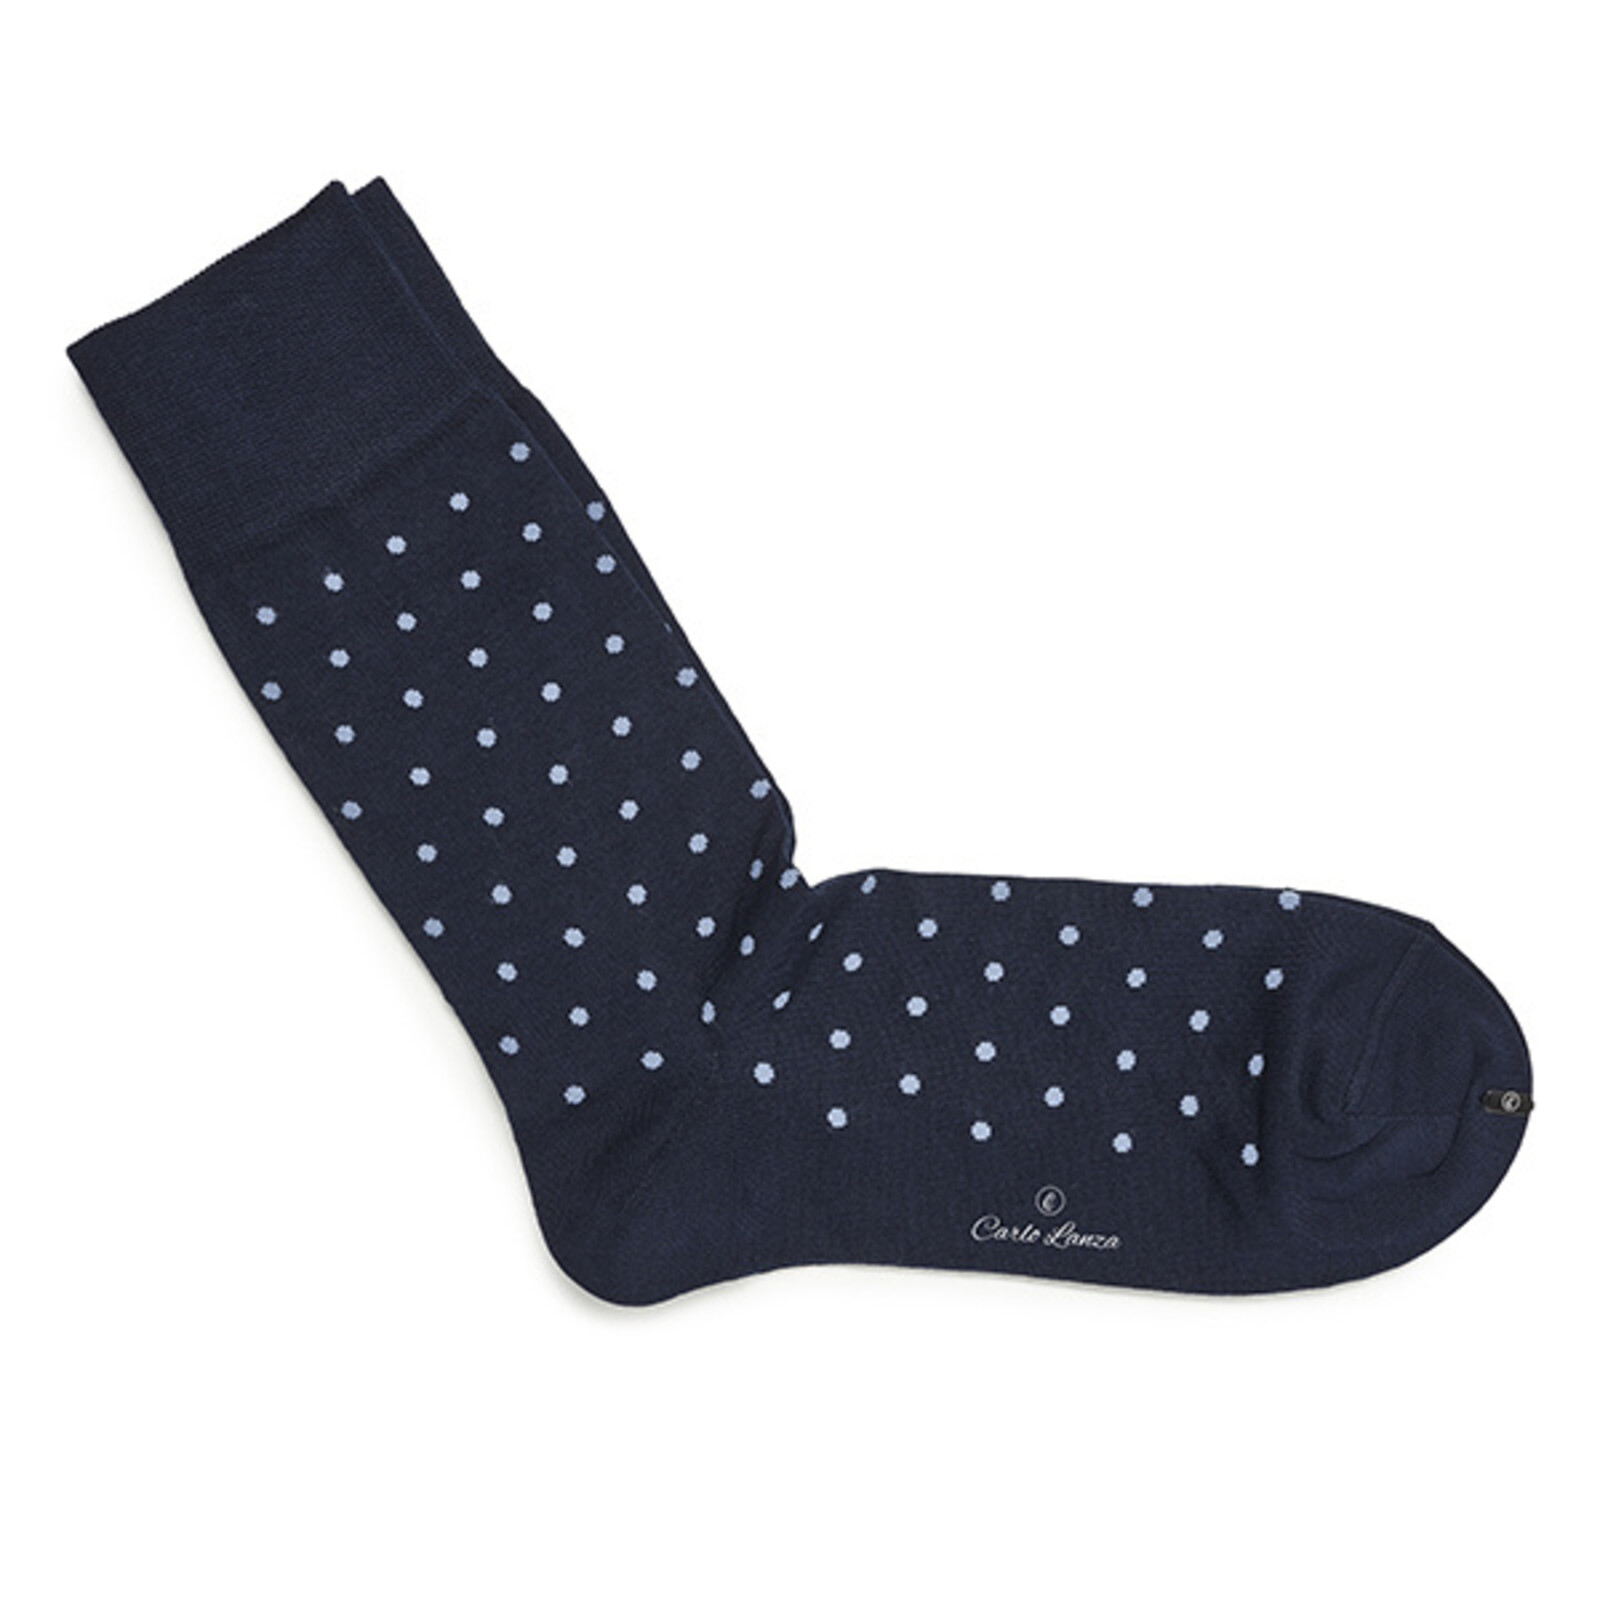 Carlo Lanza Donkerblauwe stip sokken | Carlo Lanza